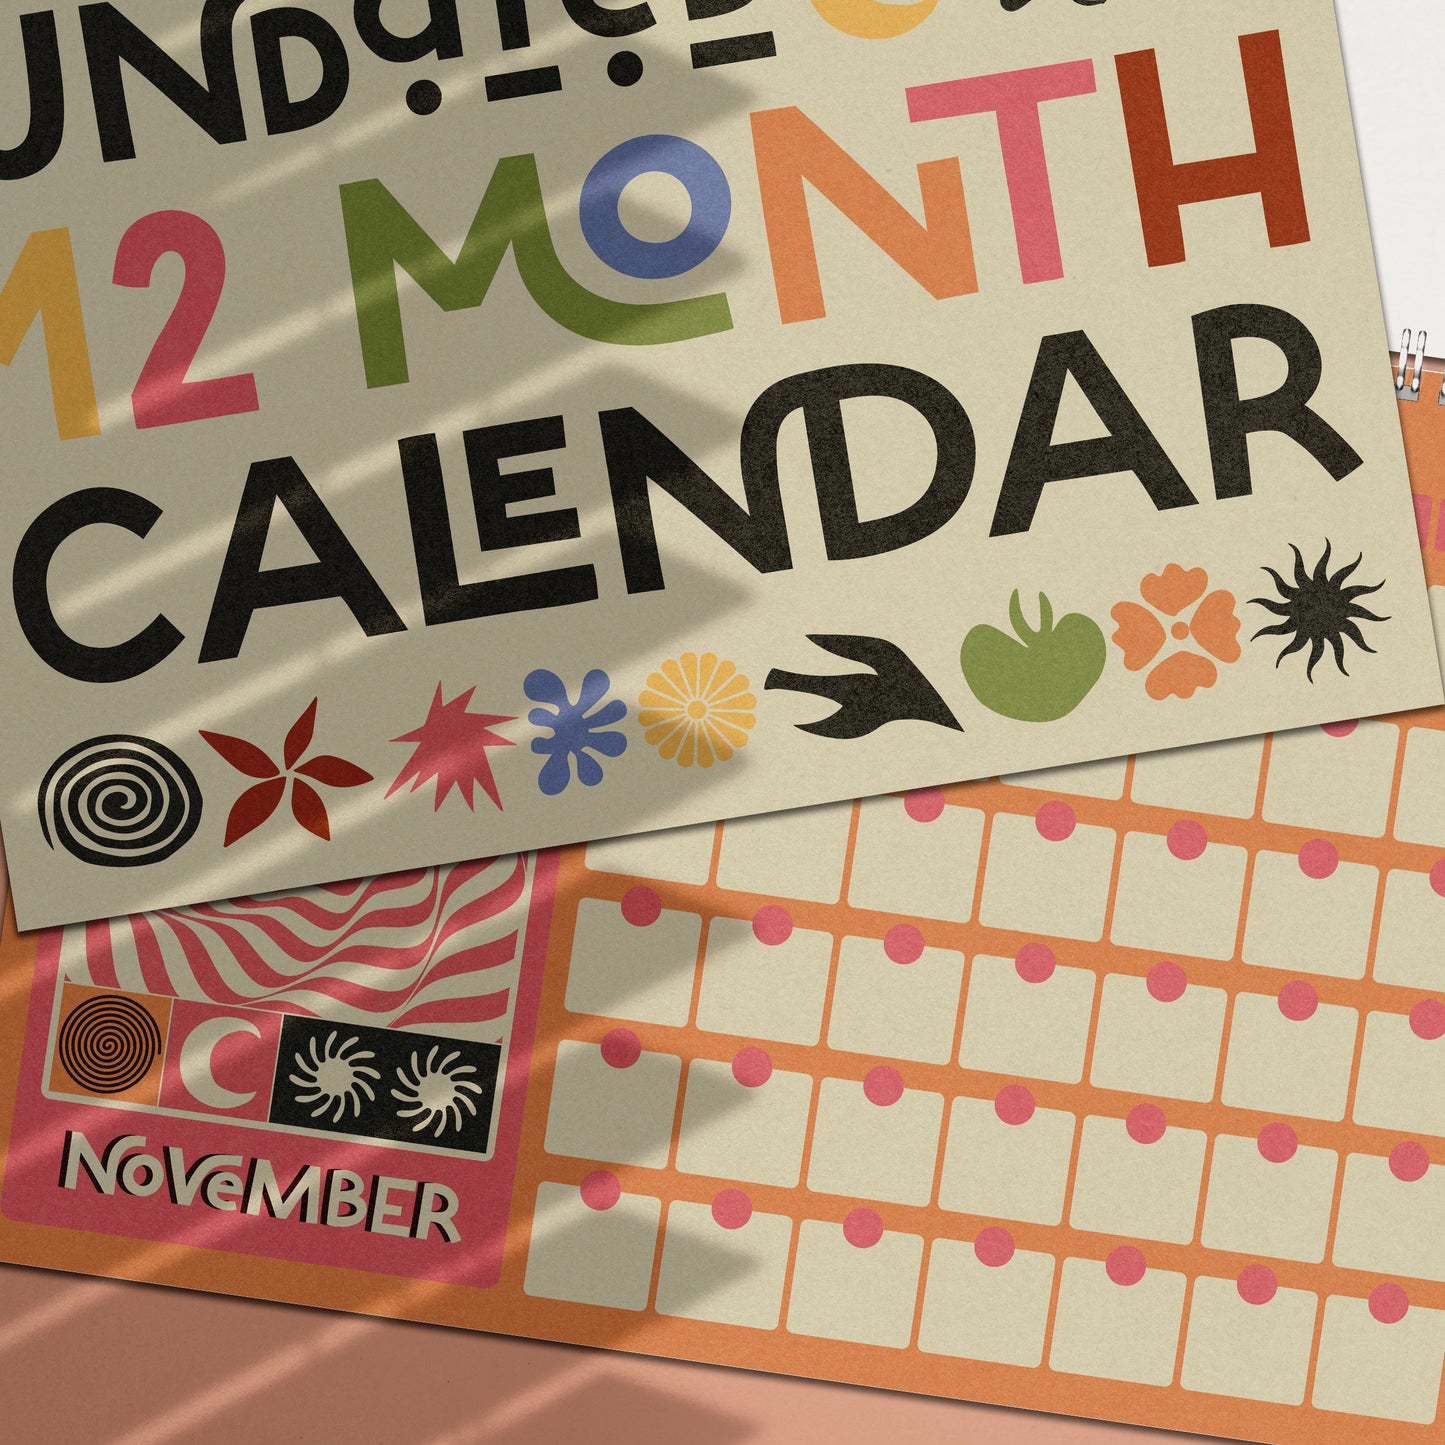 Undated Monthly Calendar | Wall Planner | Matisse Inspired | A4 Landscape | 12 month wirebound hanging calendar